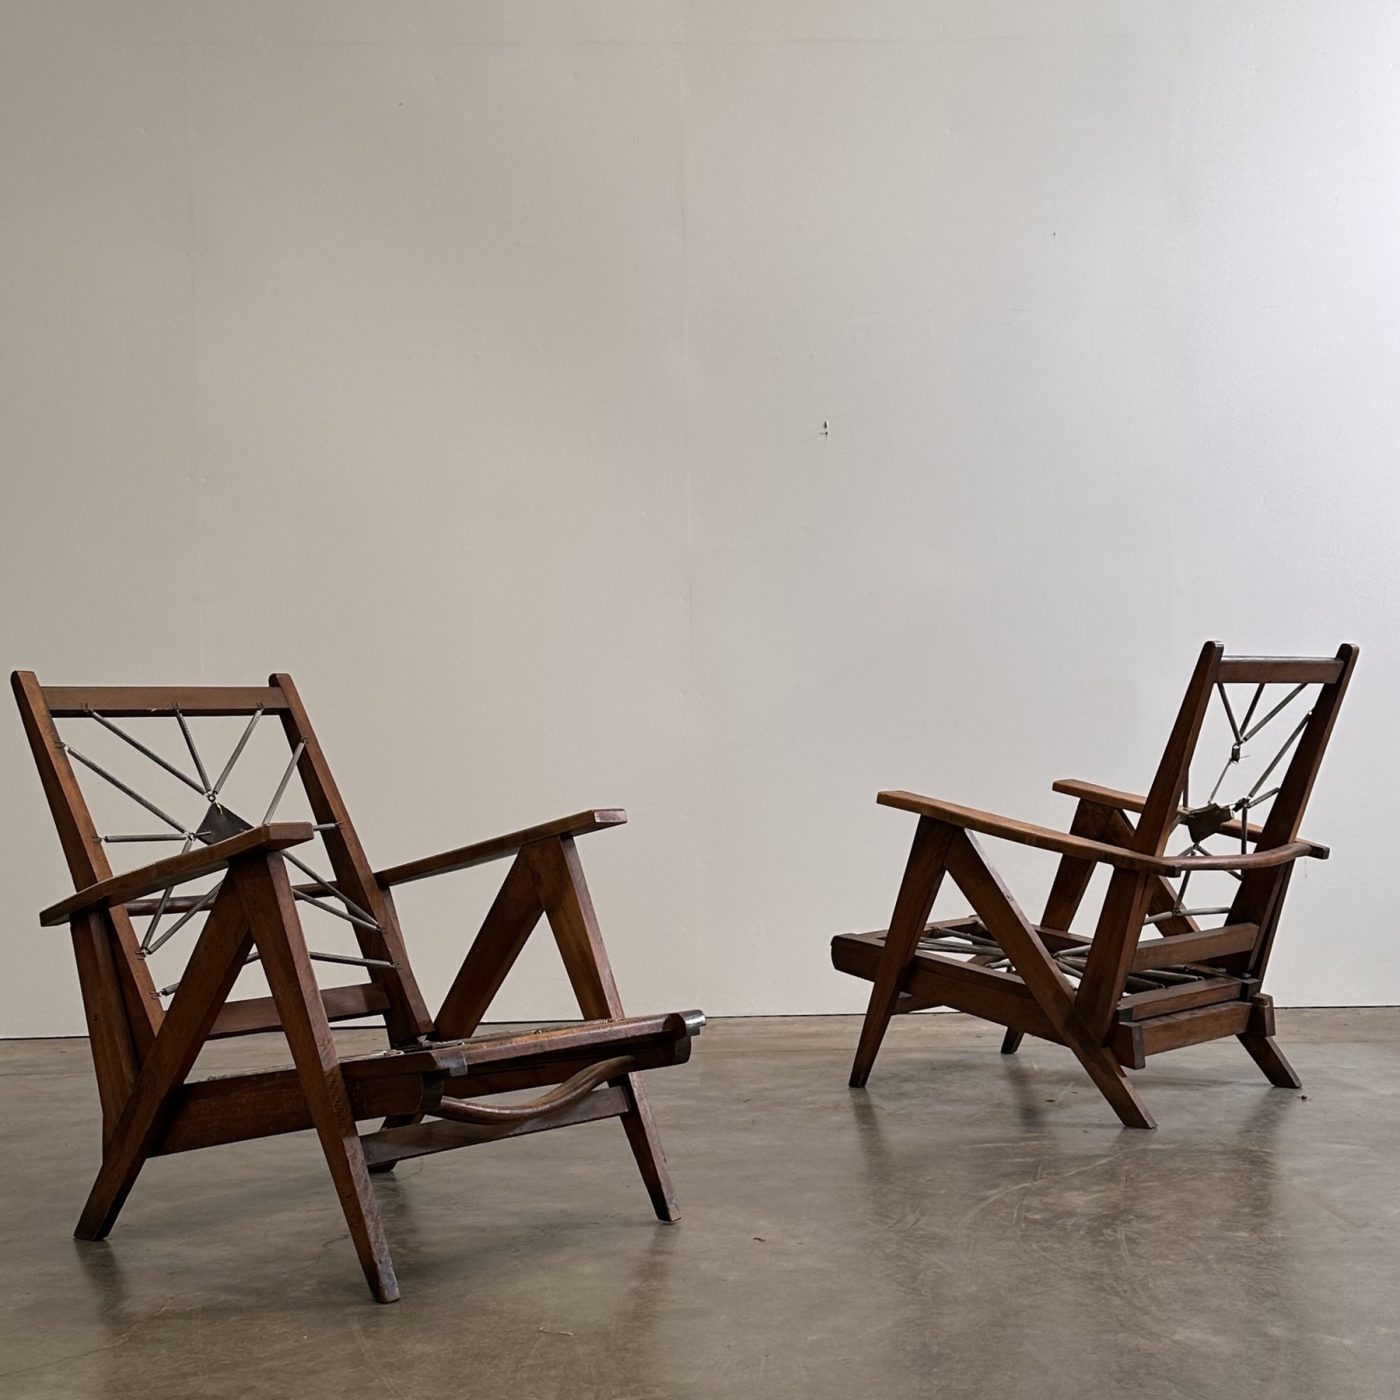 objet-vagabond-reconstruction-armchairs0000